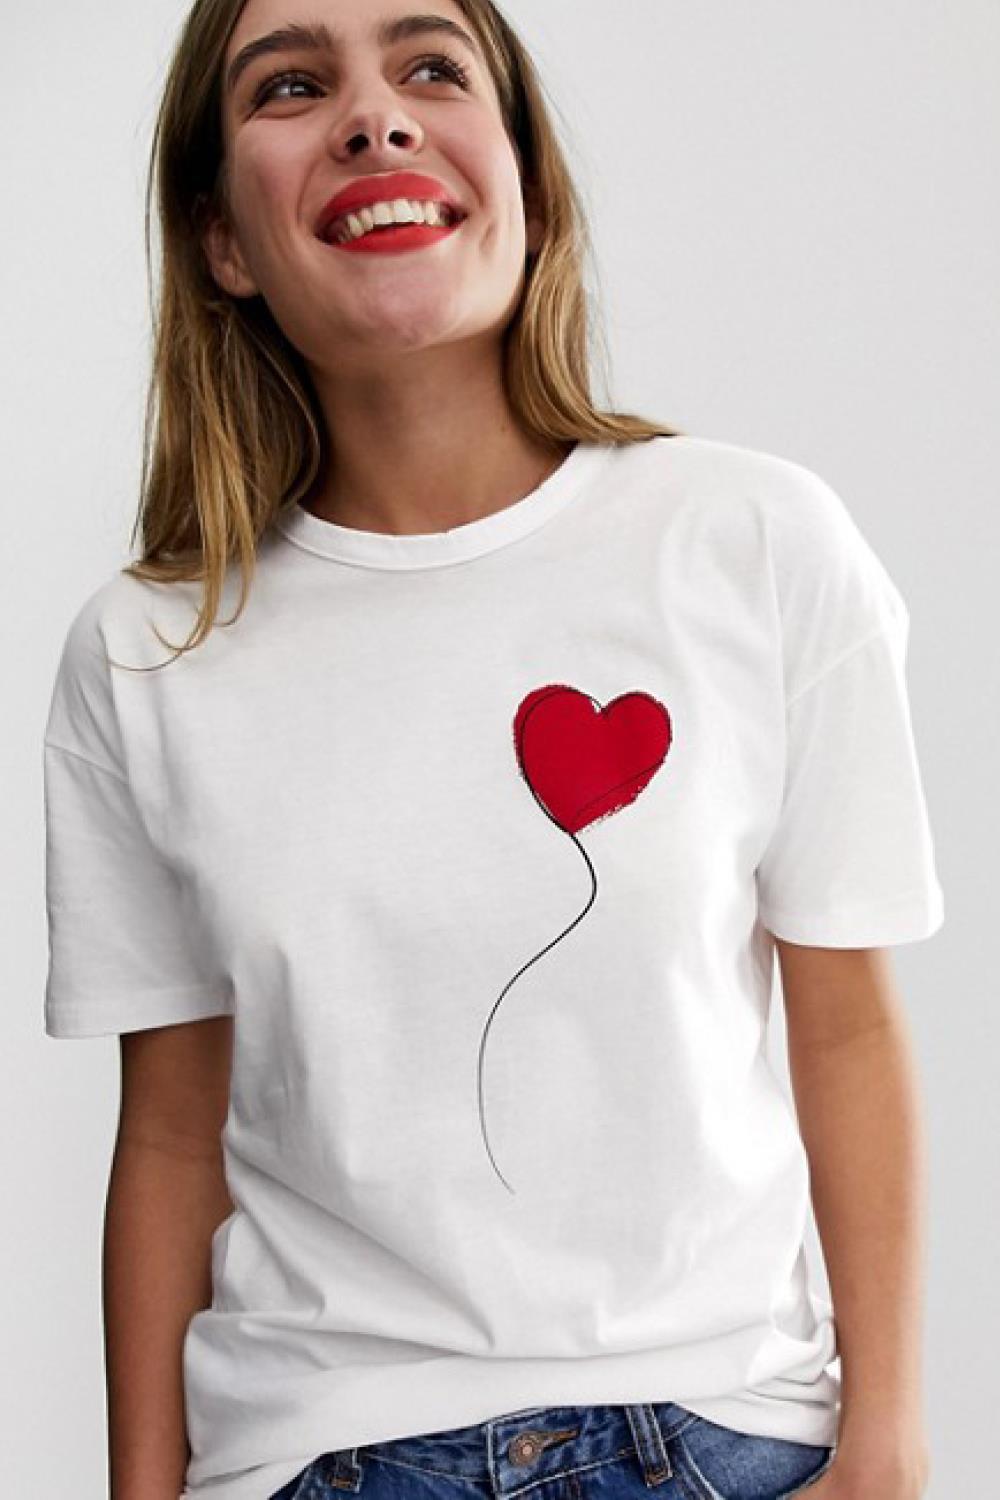 moda low cost camiseta asos 16,99€